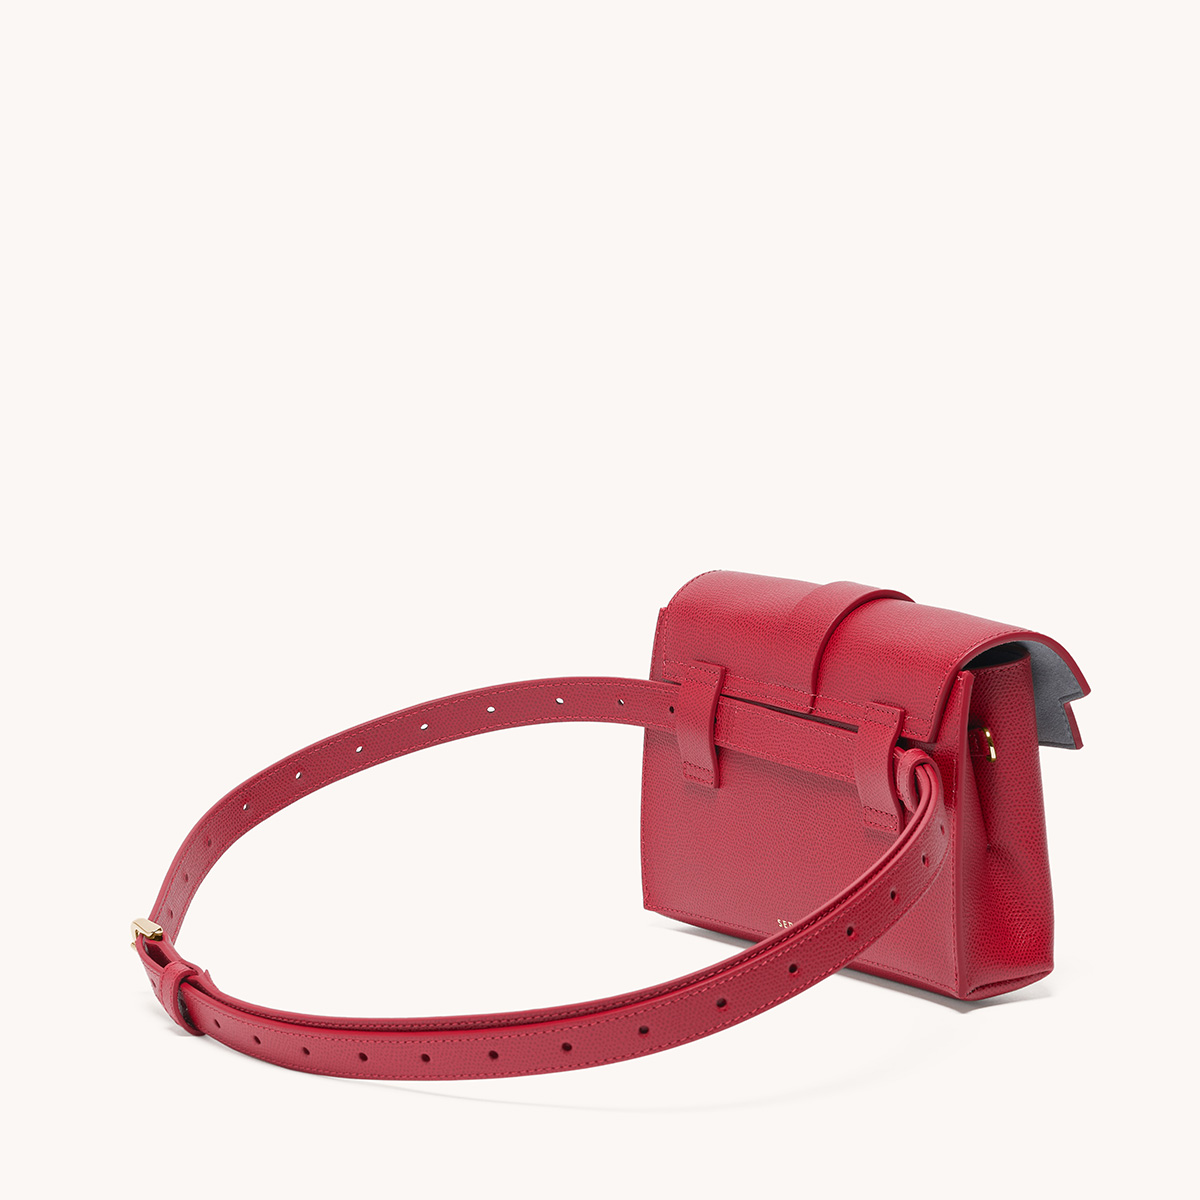 aria elevee belt bag pebbled scarlet side view with strap